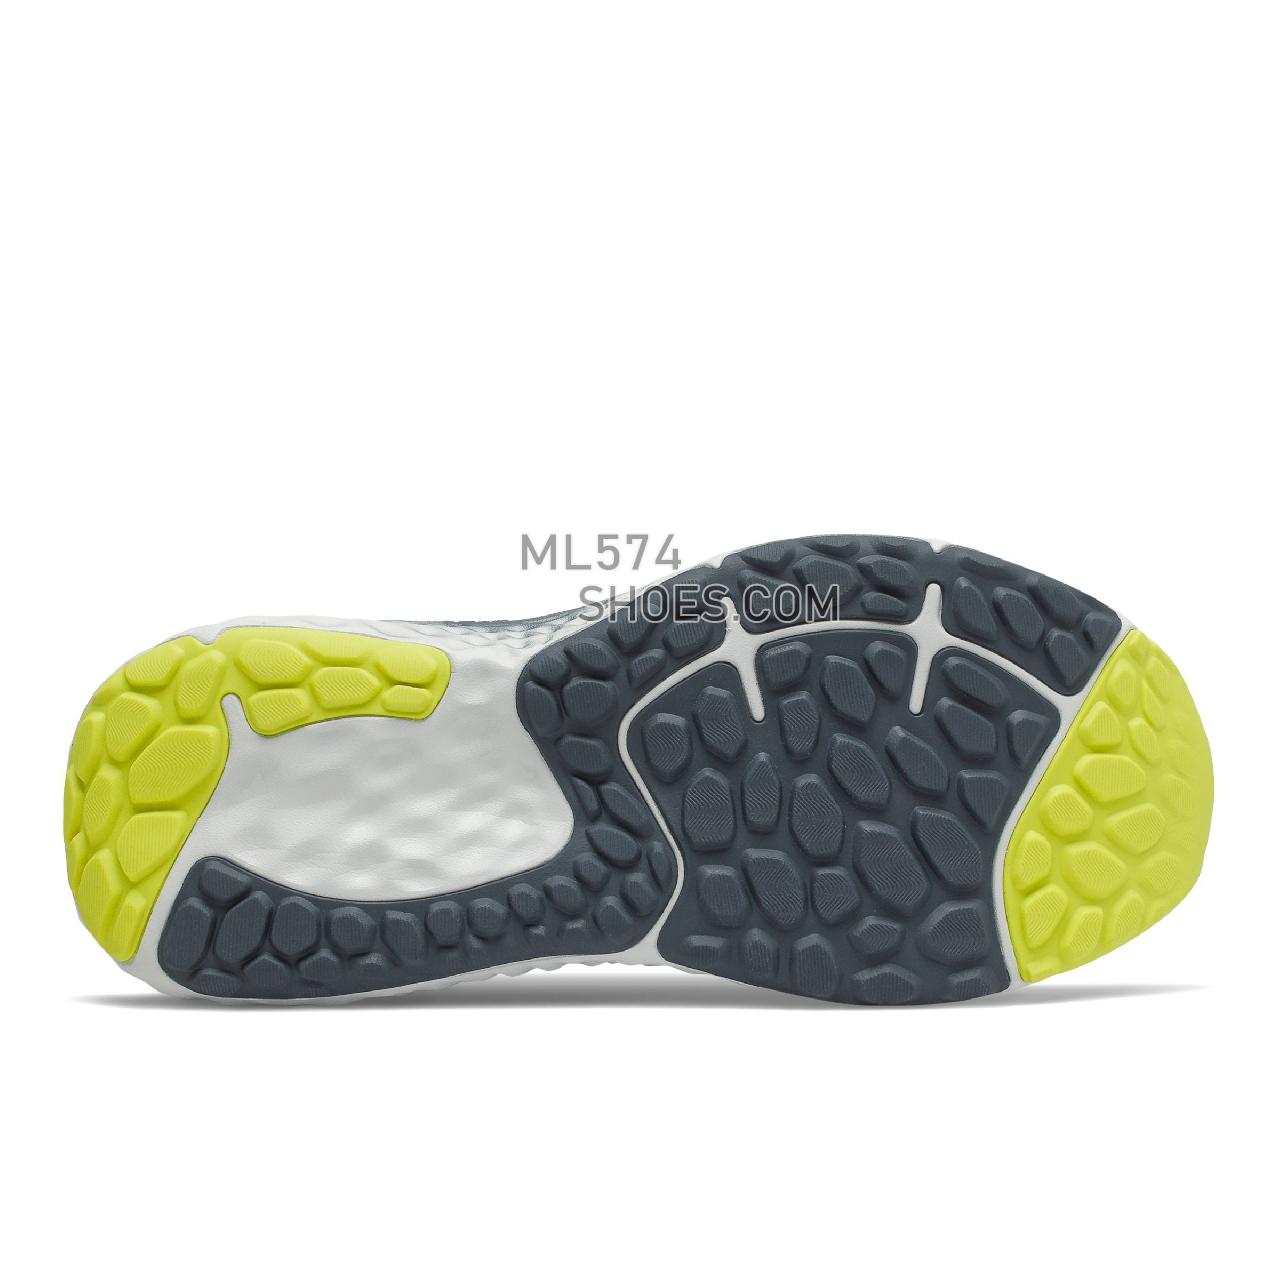 New Balance MEVOZV1 - Men's Classic Sneakers - Sulphur Yellow with Gray - MEVOZCY1